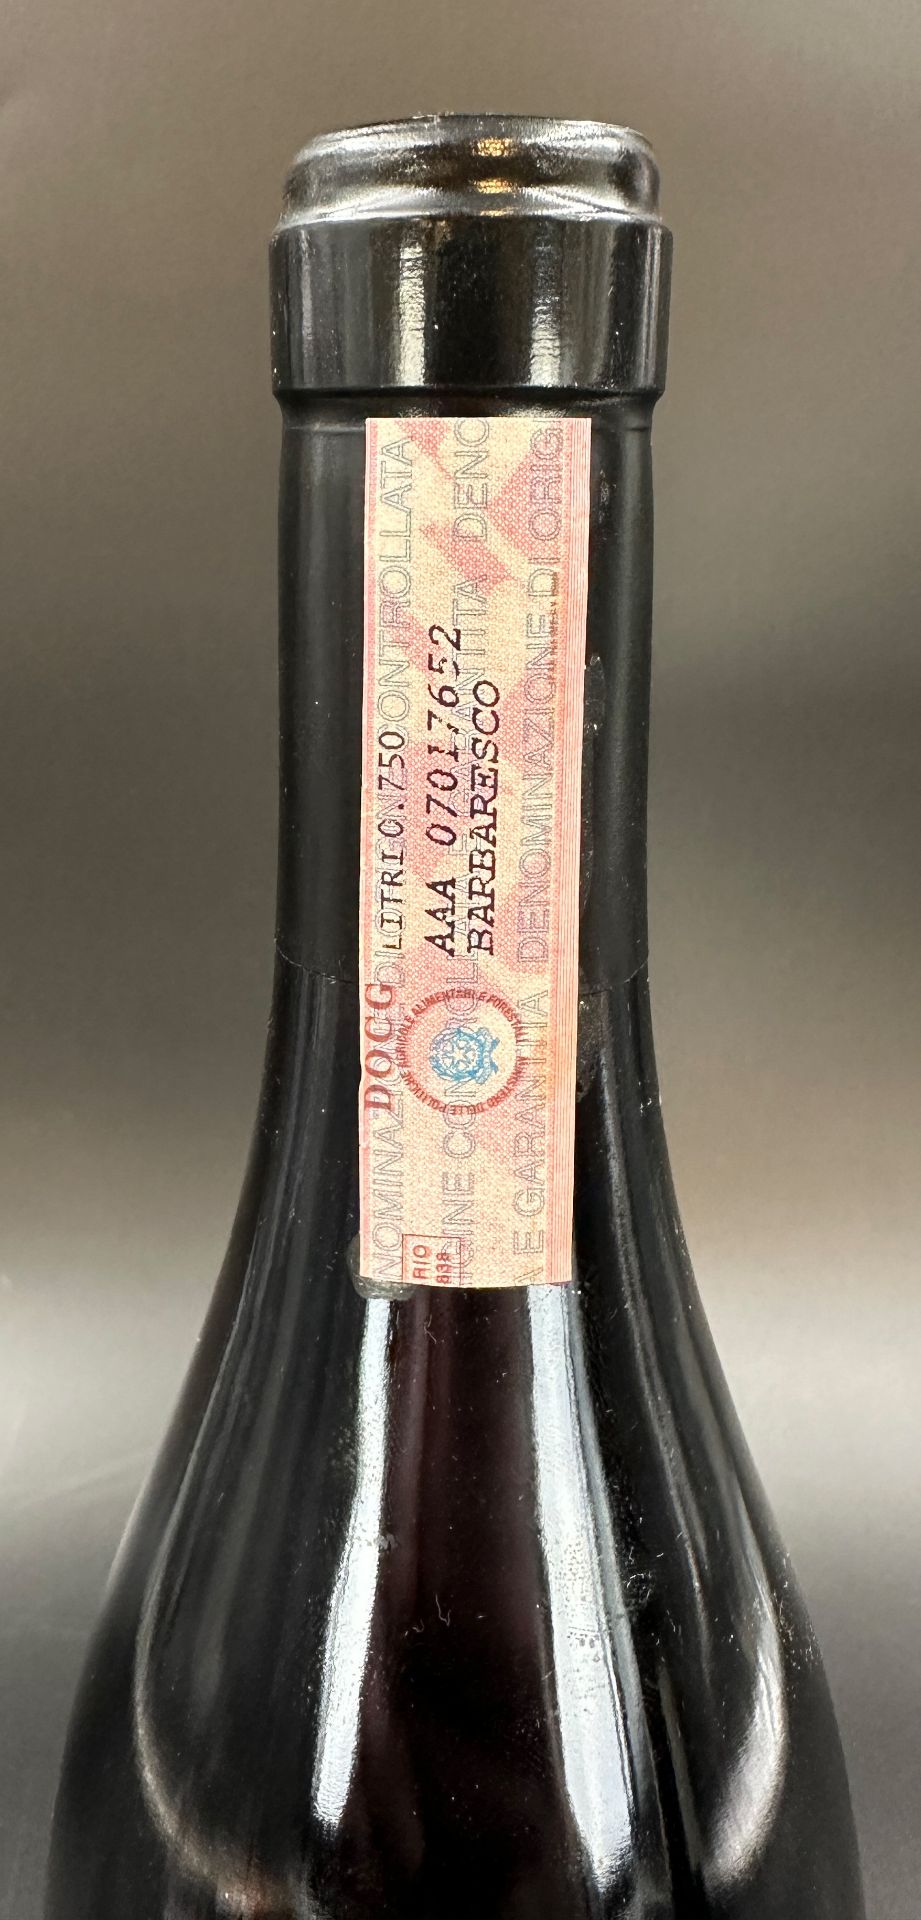 GAJA. Barbaresco. 1 bottle of red wine. 2005. - Image 6 of 10